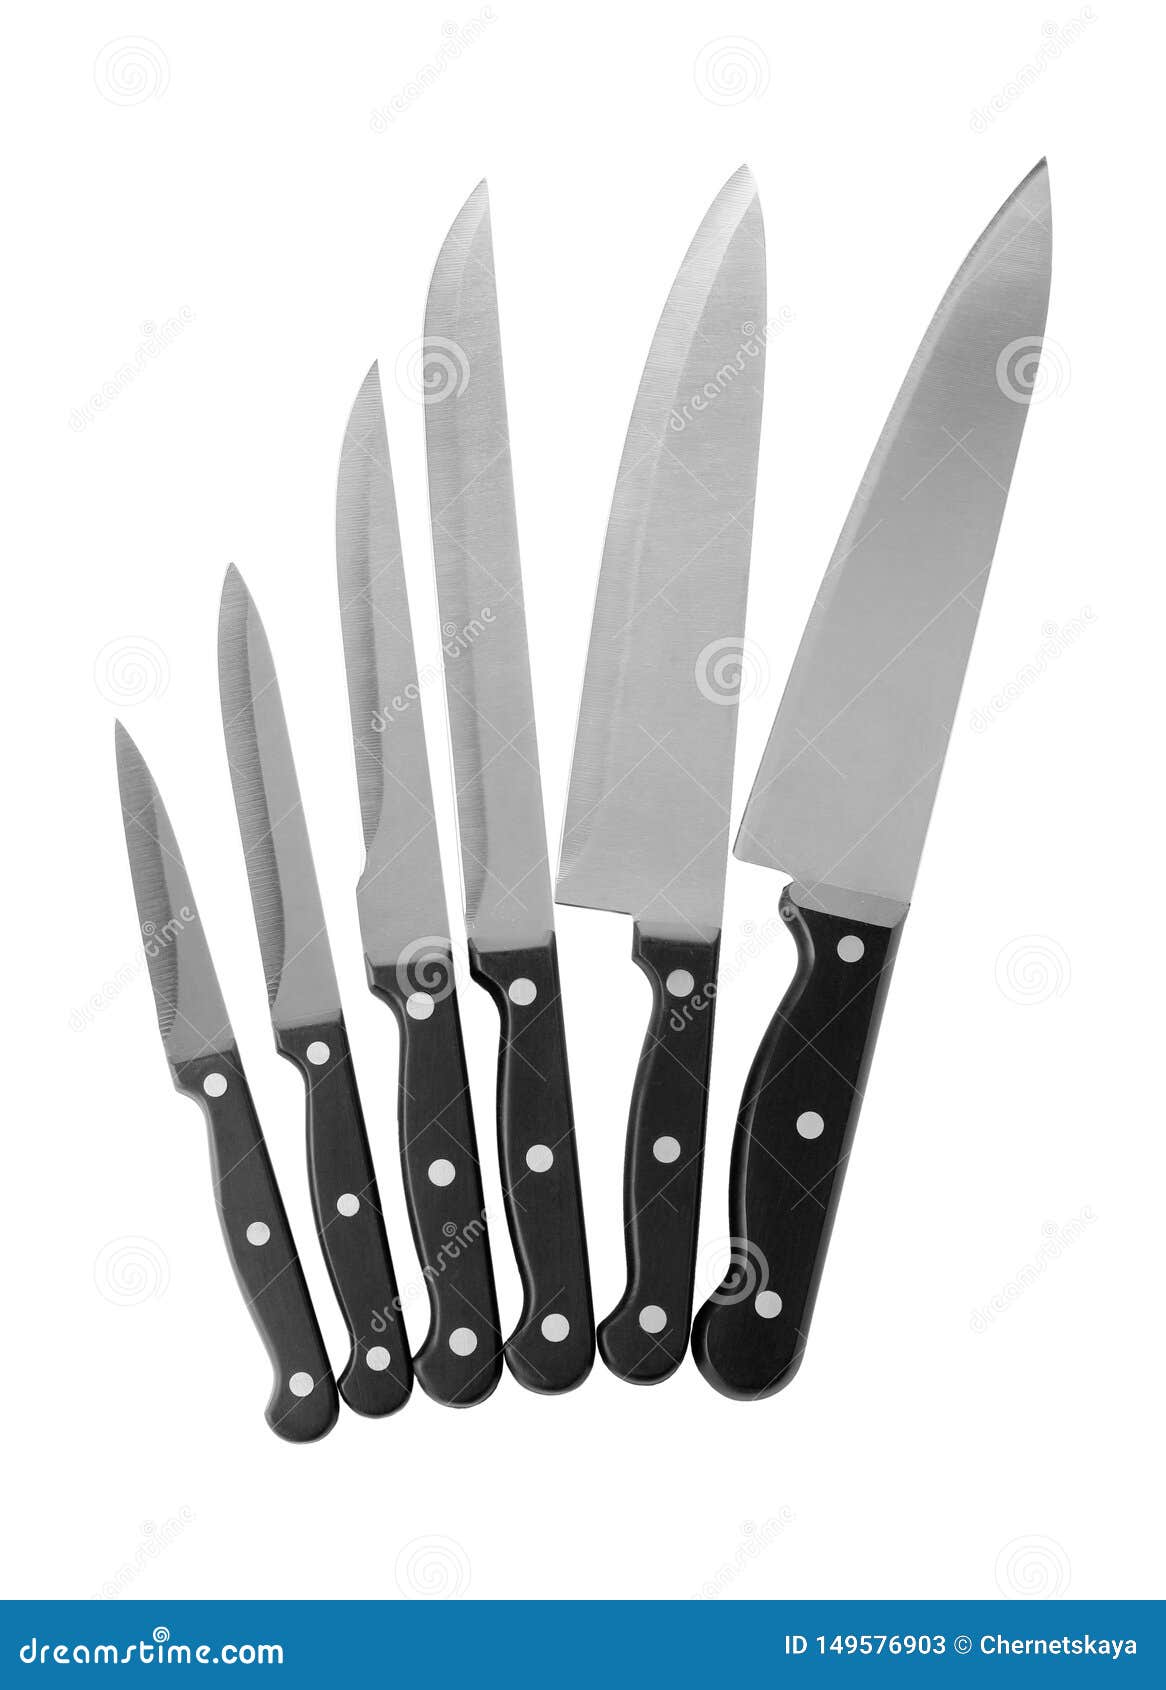 https://thumbs.dreamstime.com/z/set-sharp-knives-white-background-top-view-set-sharp-knives-white-background-149576903.jpg